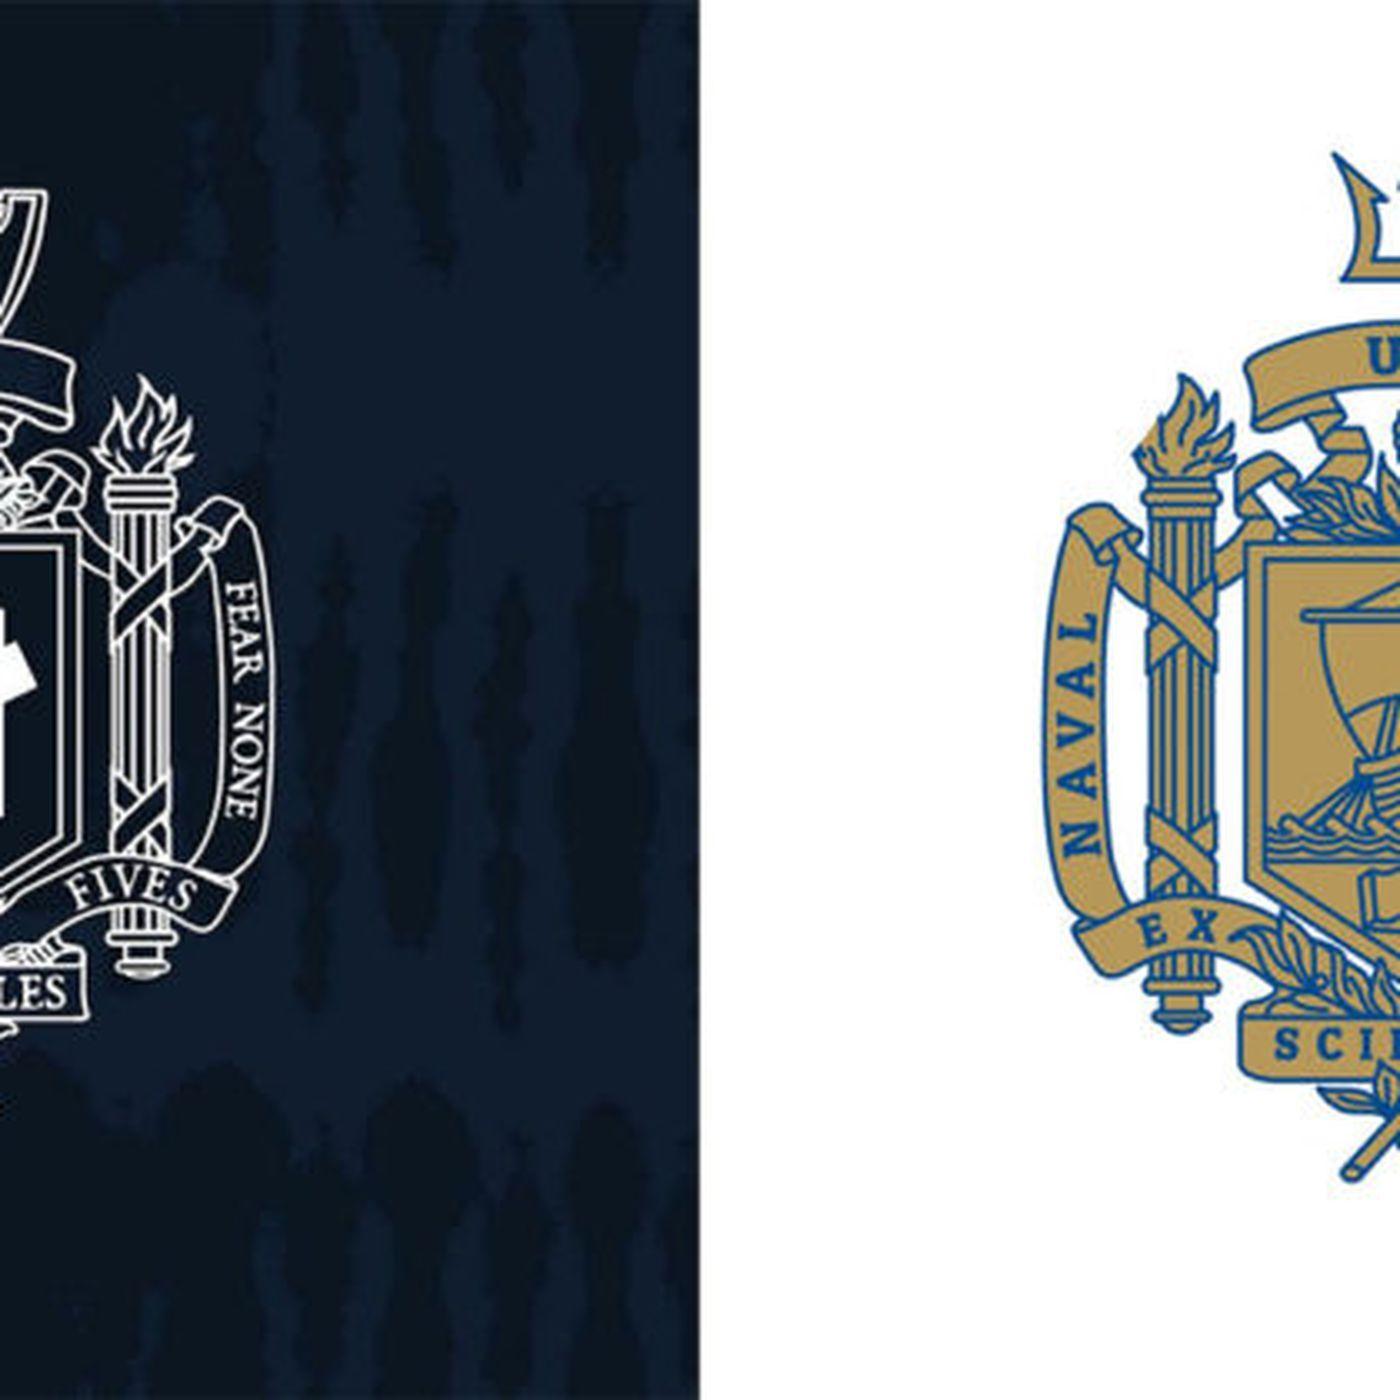 Navy's Logo - Navy accuses Nike of trademark infringement over new crest logo ...